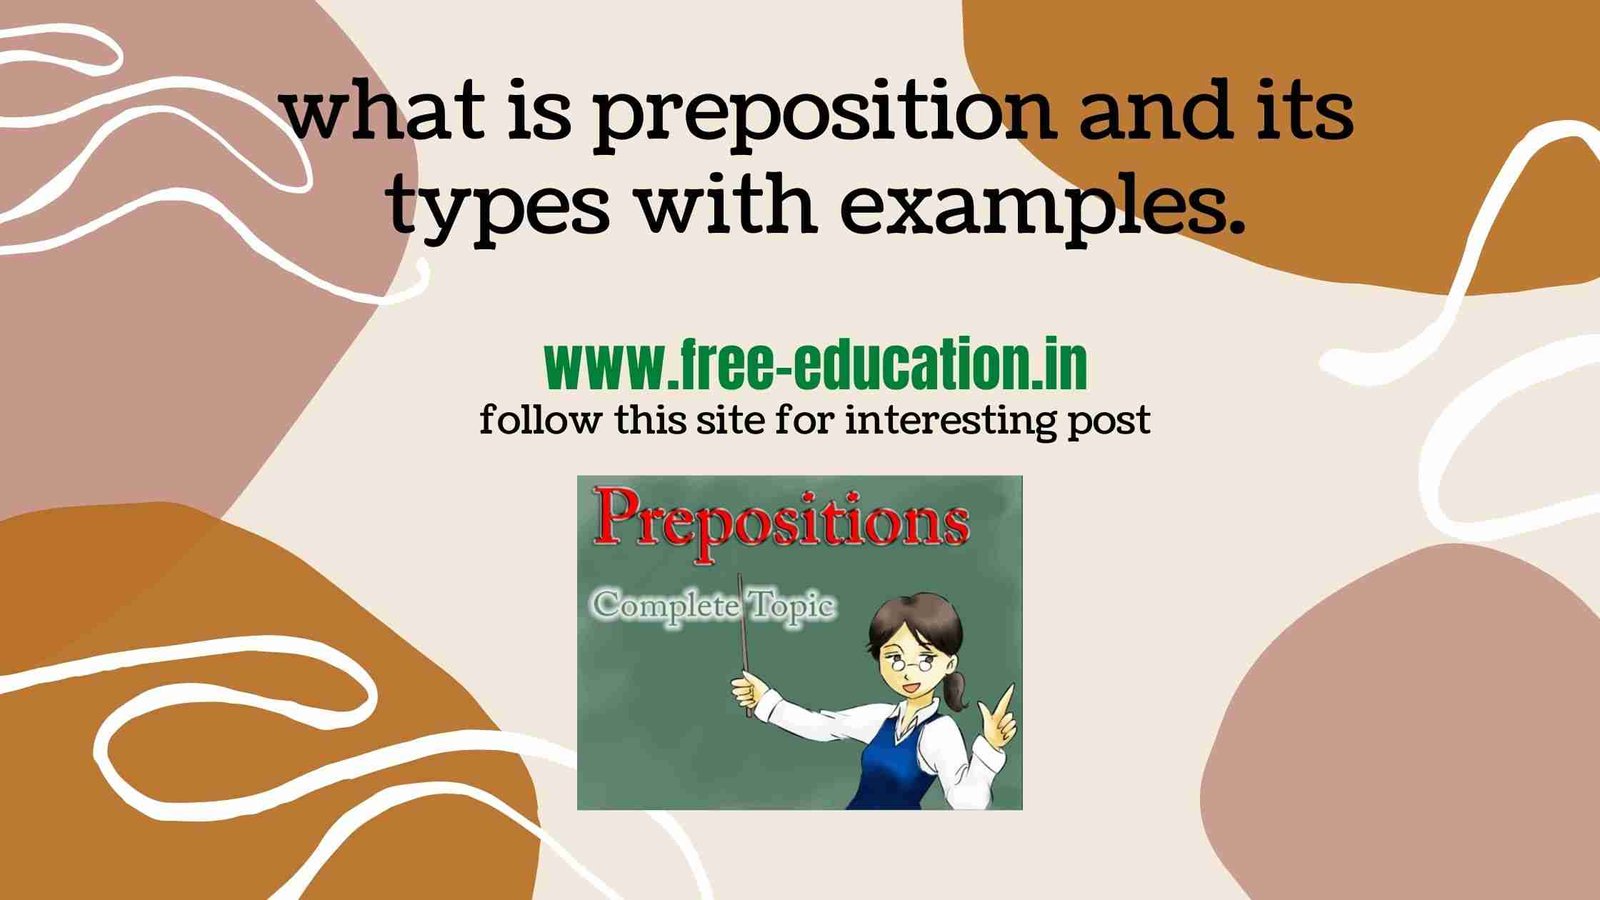 prepositions definition